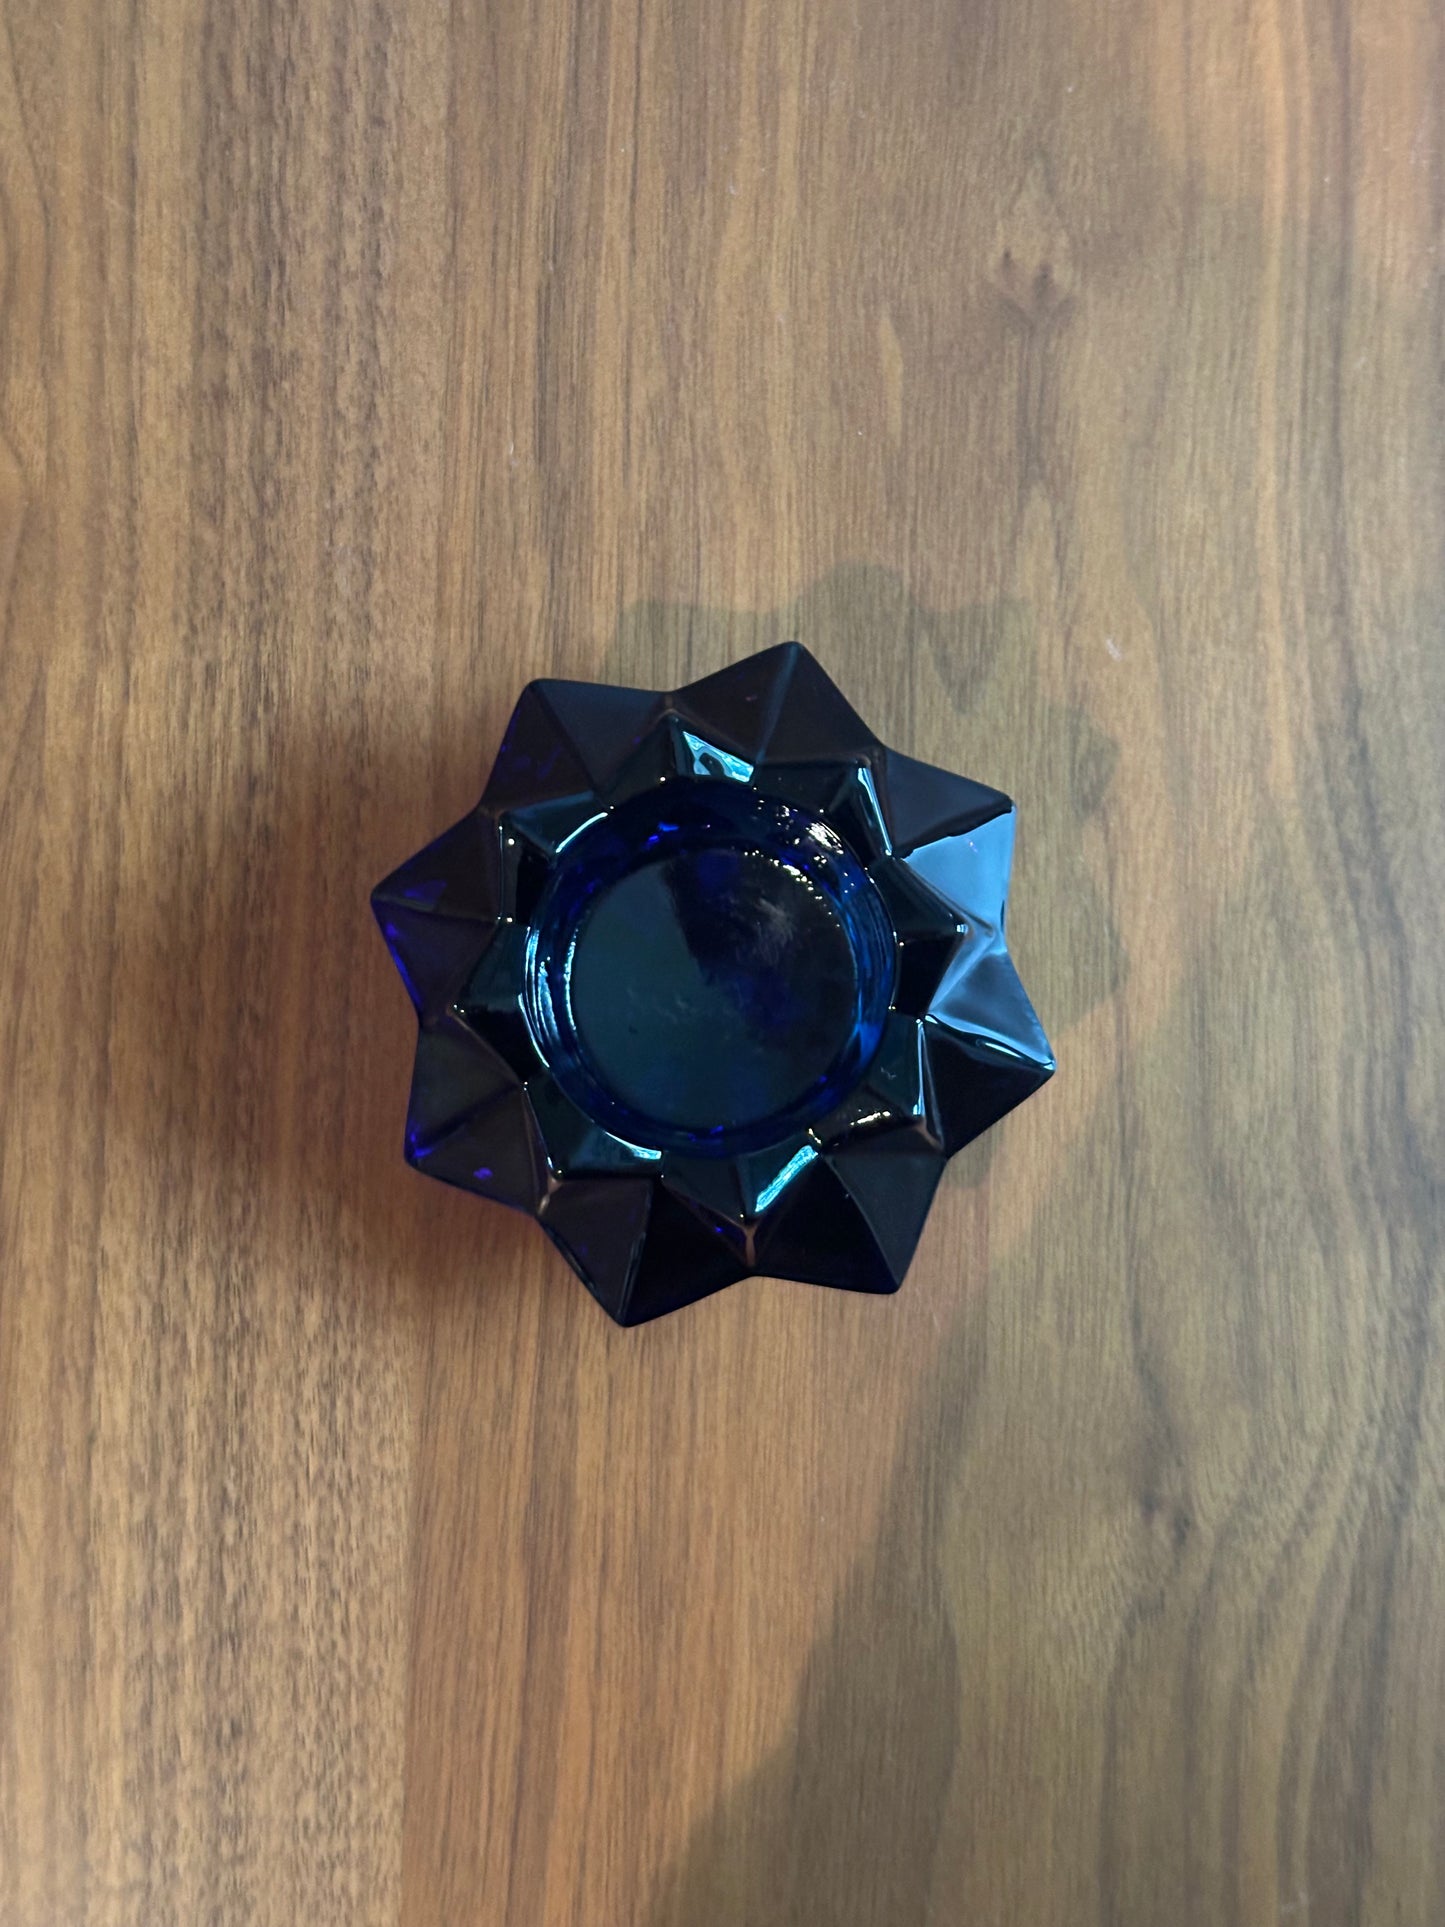 Indiana Glass Cobalt Star Burst Votive